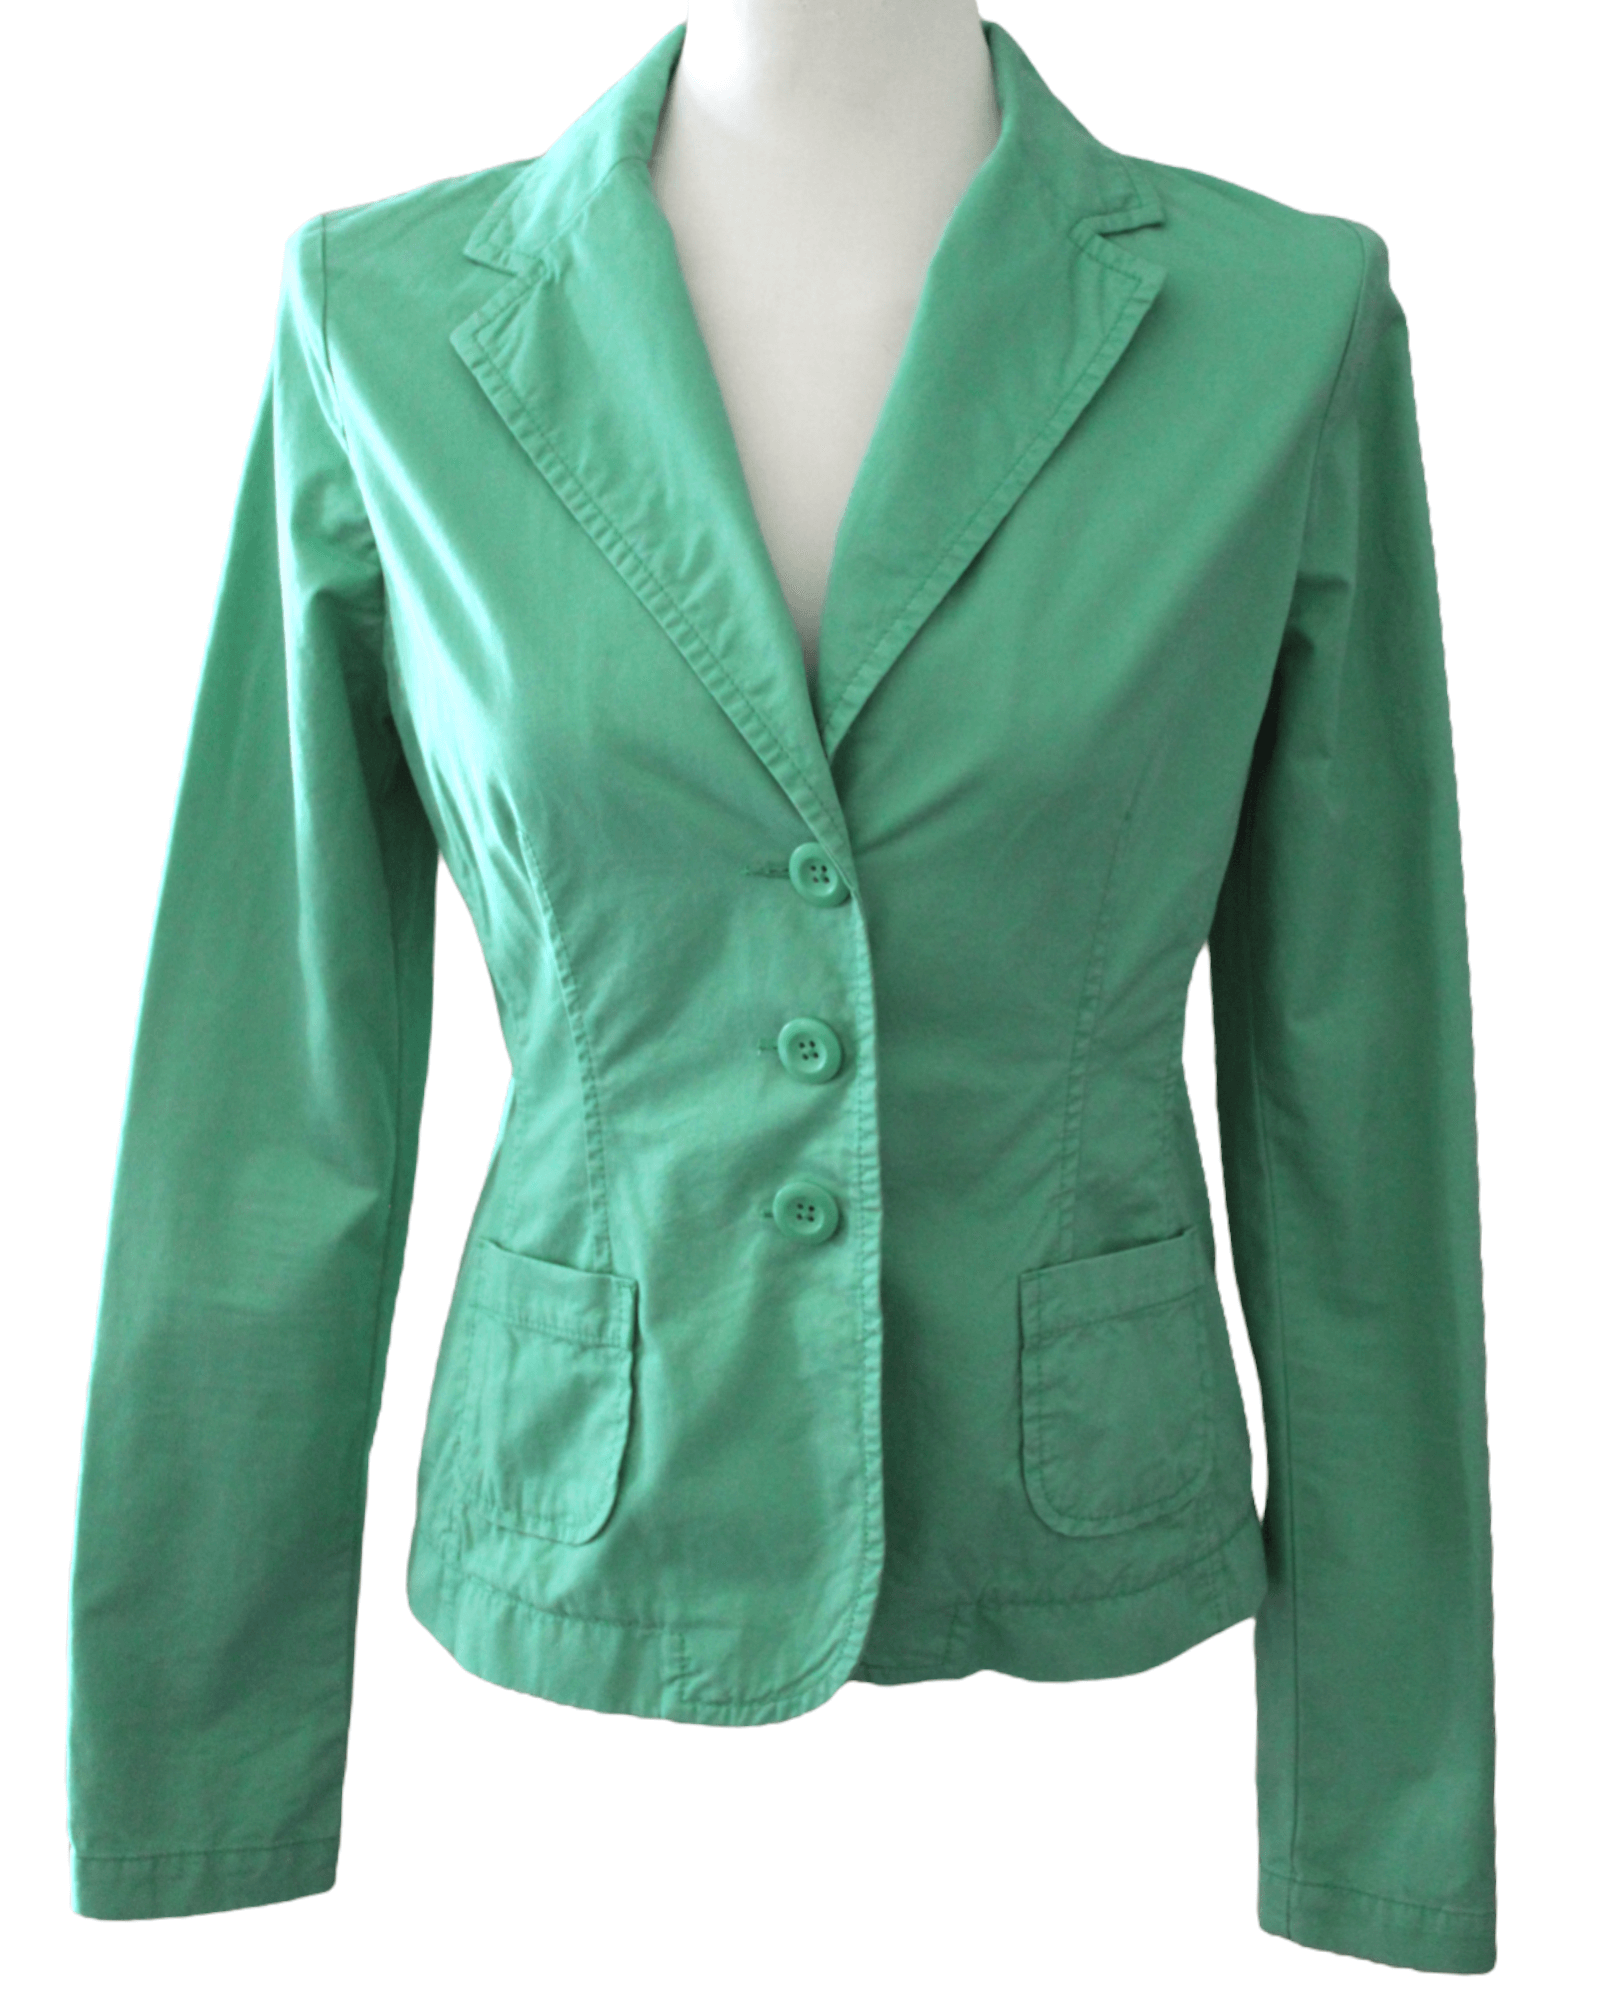 Warm Spring OLD NAVY mint green blazer jacket